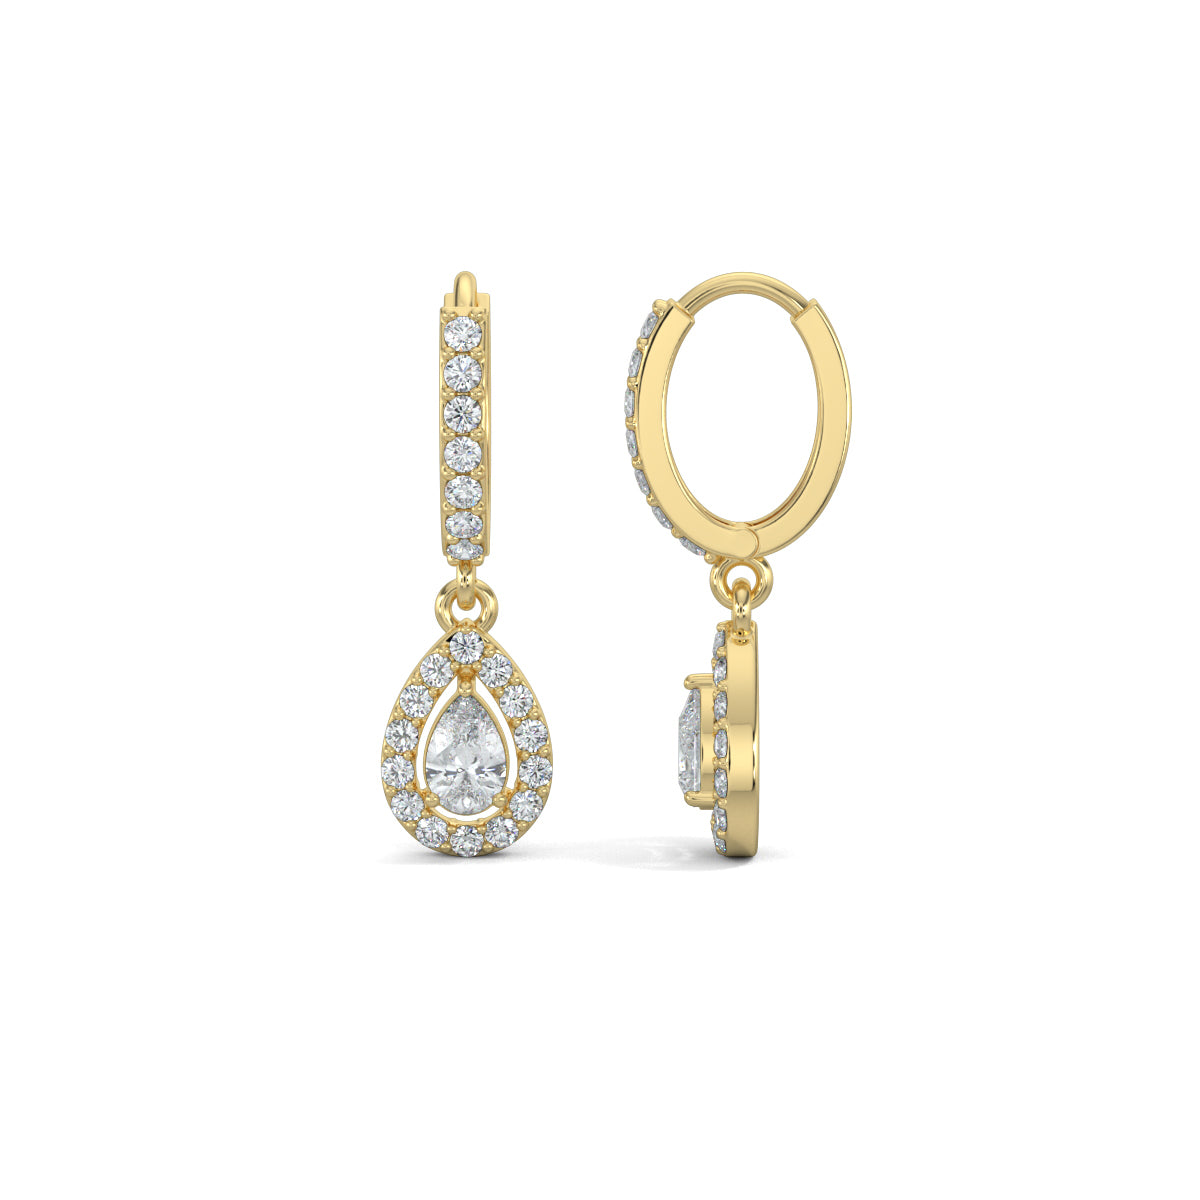 Yellow Gold, Natural diamond dangler earrings, Lab-grown diamond dangler earrings, pave setting, round diamonds, pear diamond, halo setting, modern jewelry, elegant earrings.